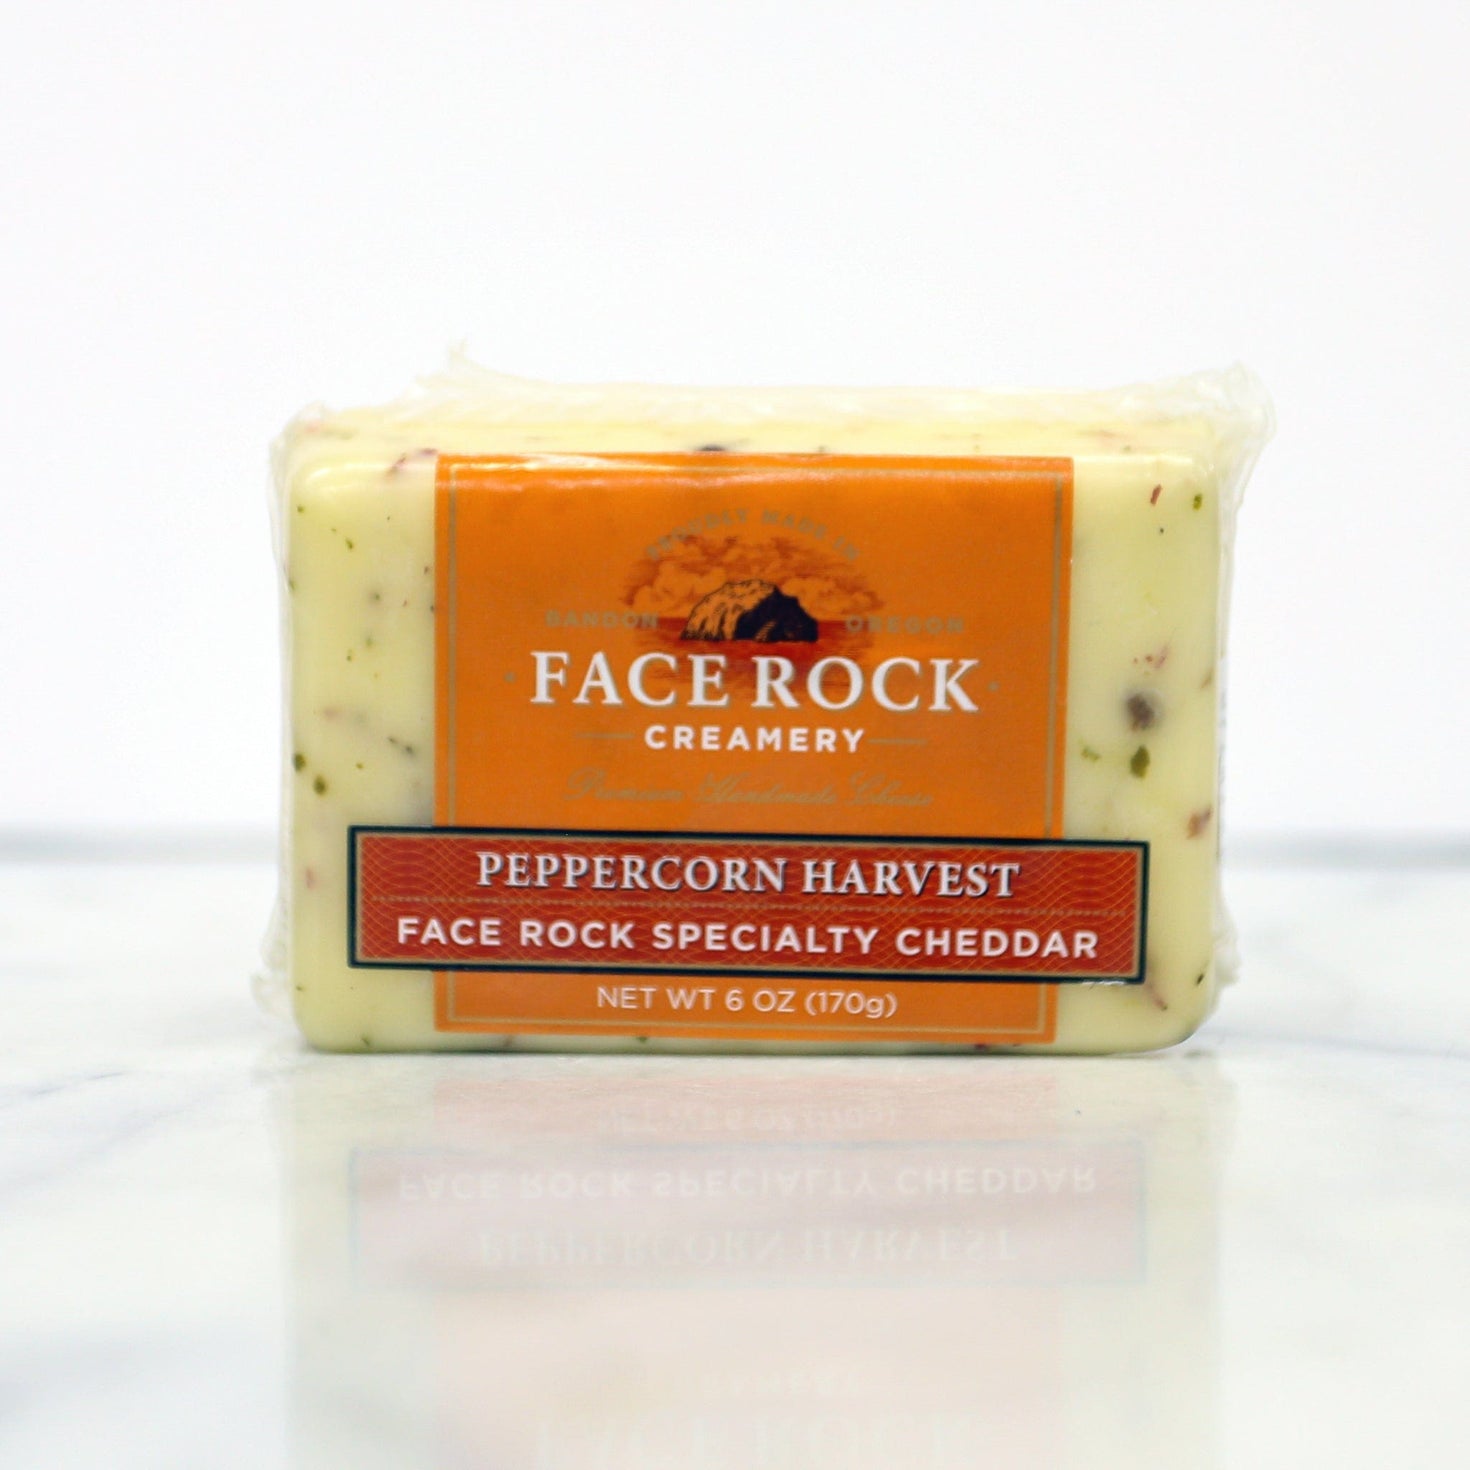 Face Rock Creamery Cheddar: Peppercorn Harvest 6oz